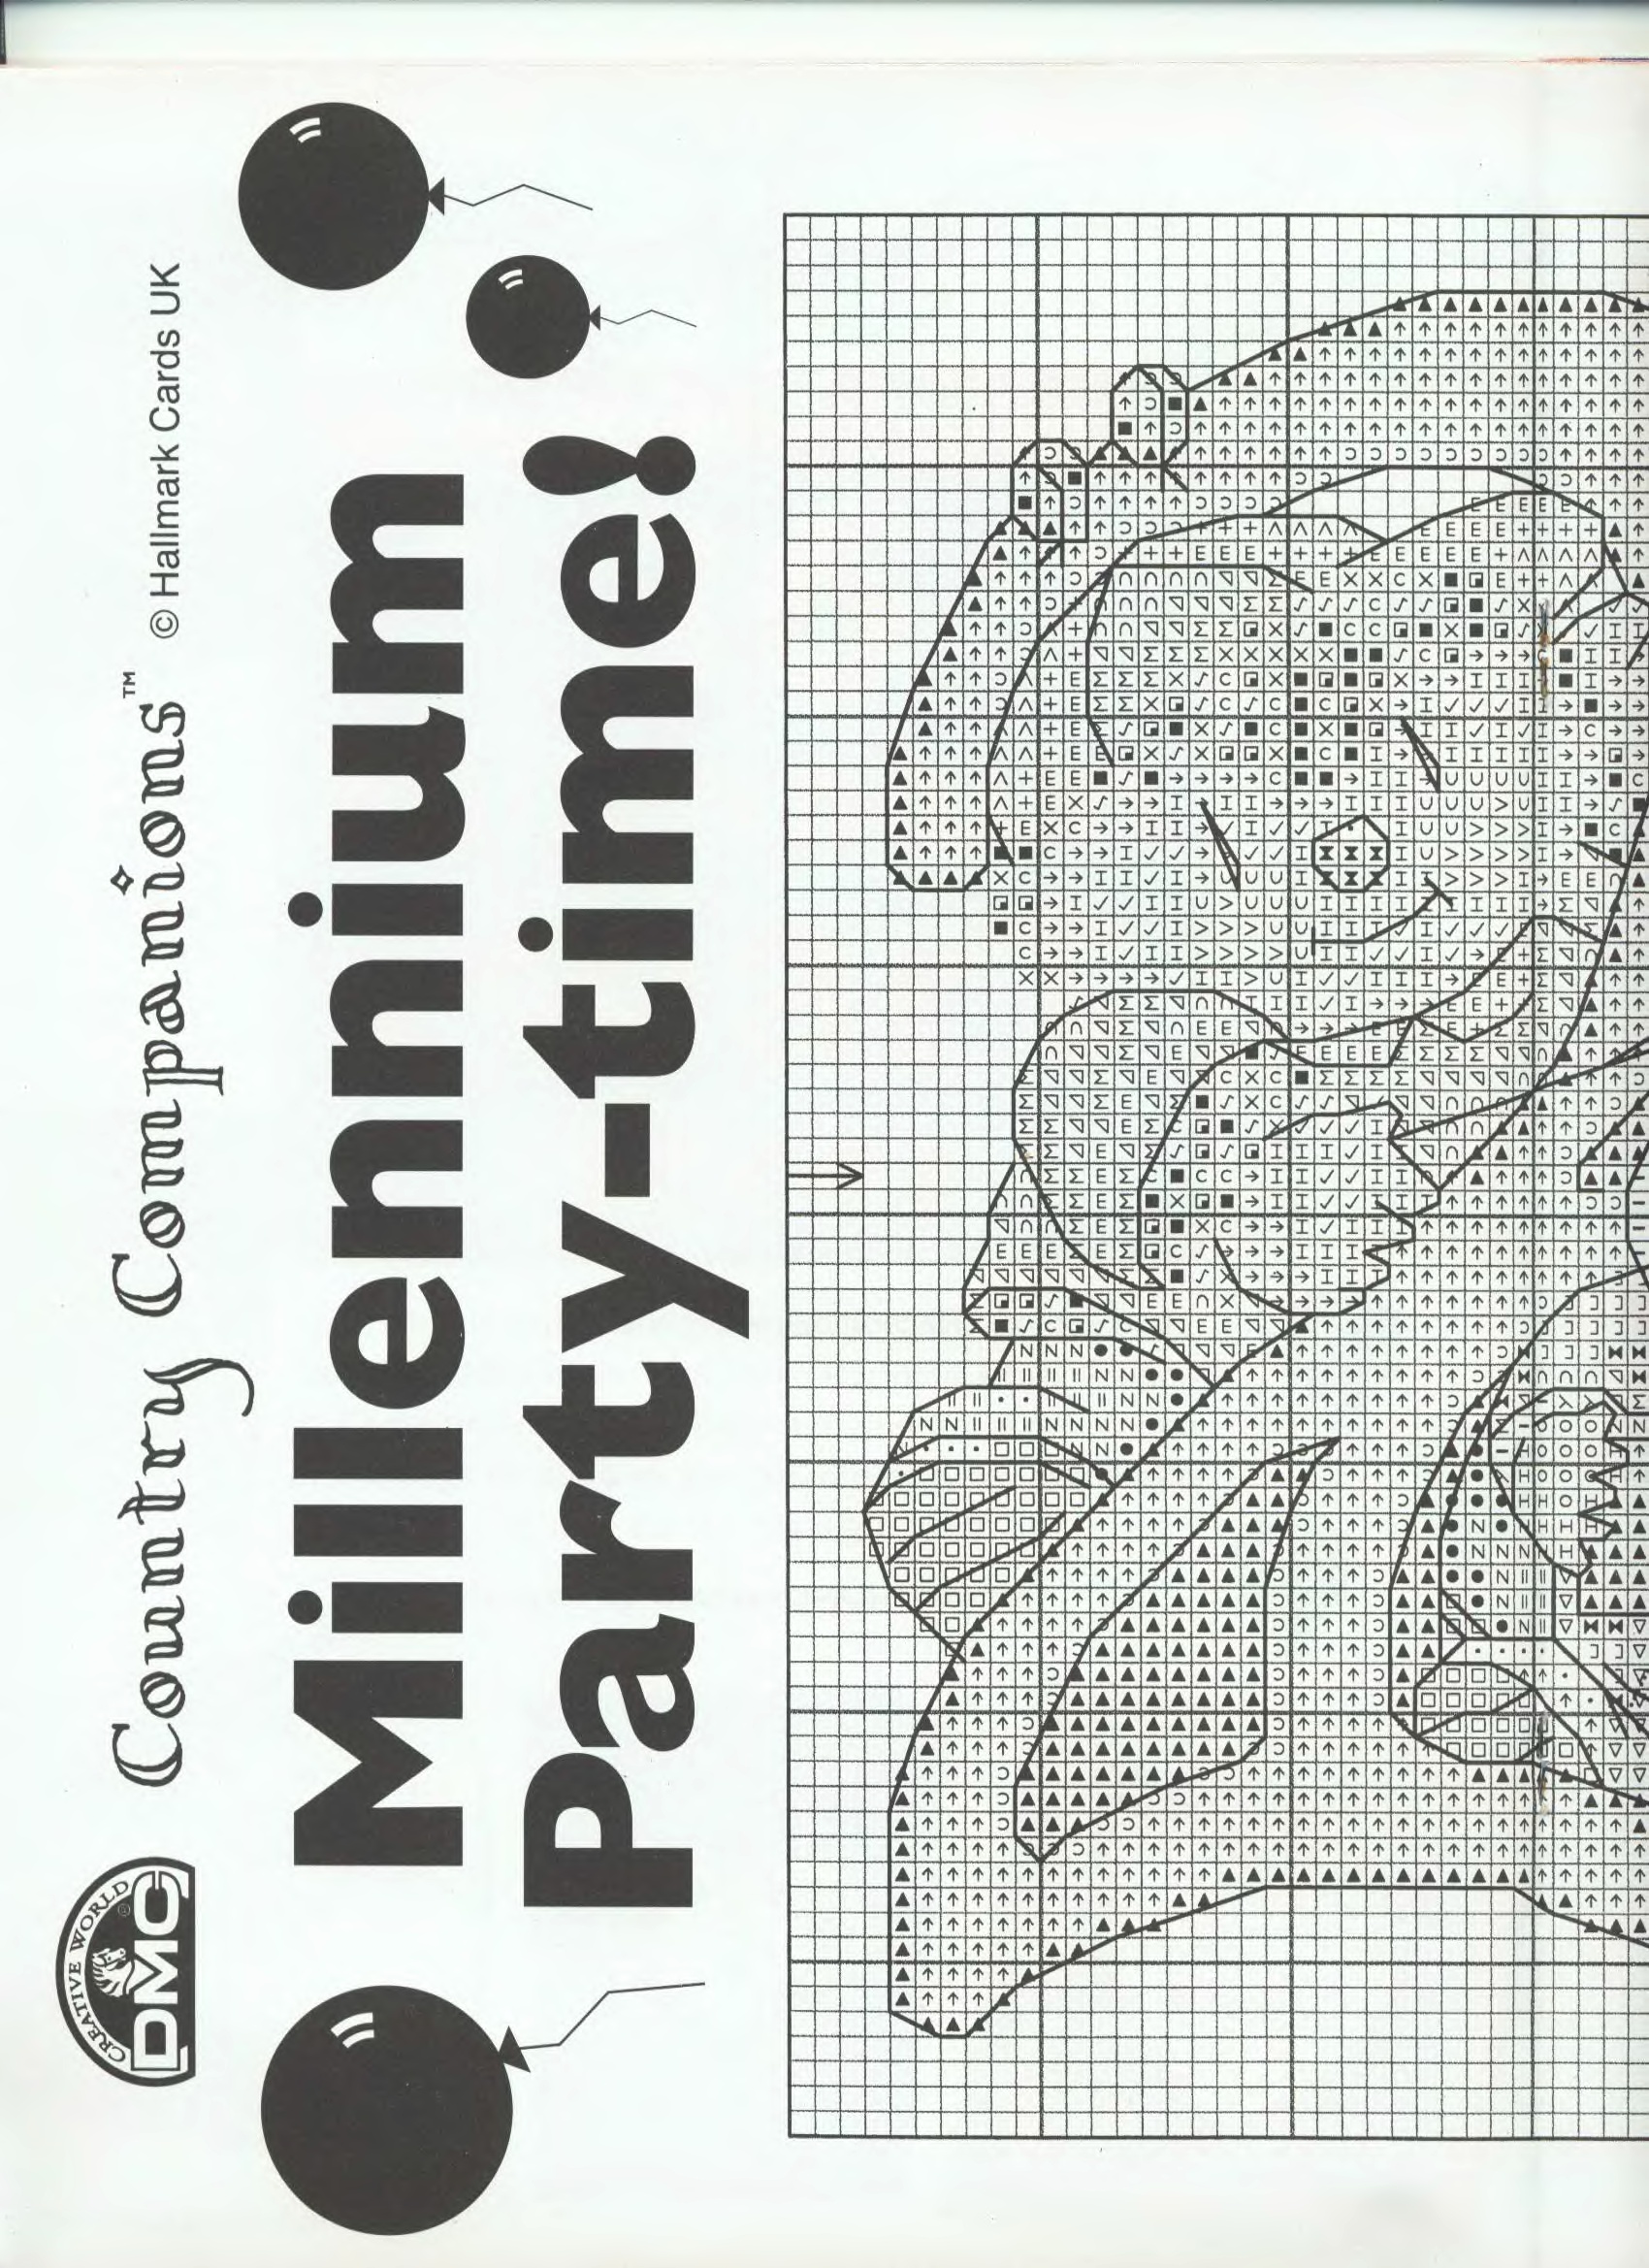 Millenium party-time cross stitch pattern (3)